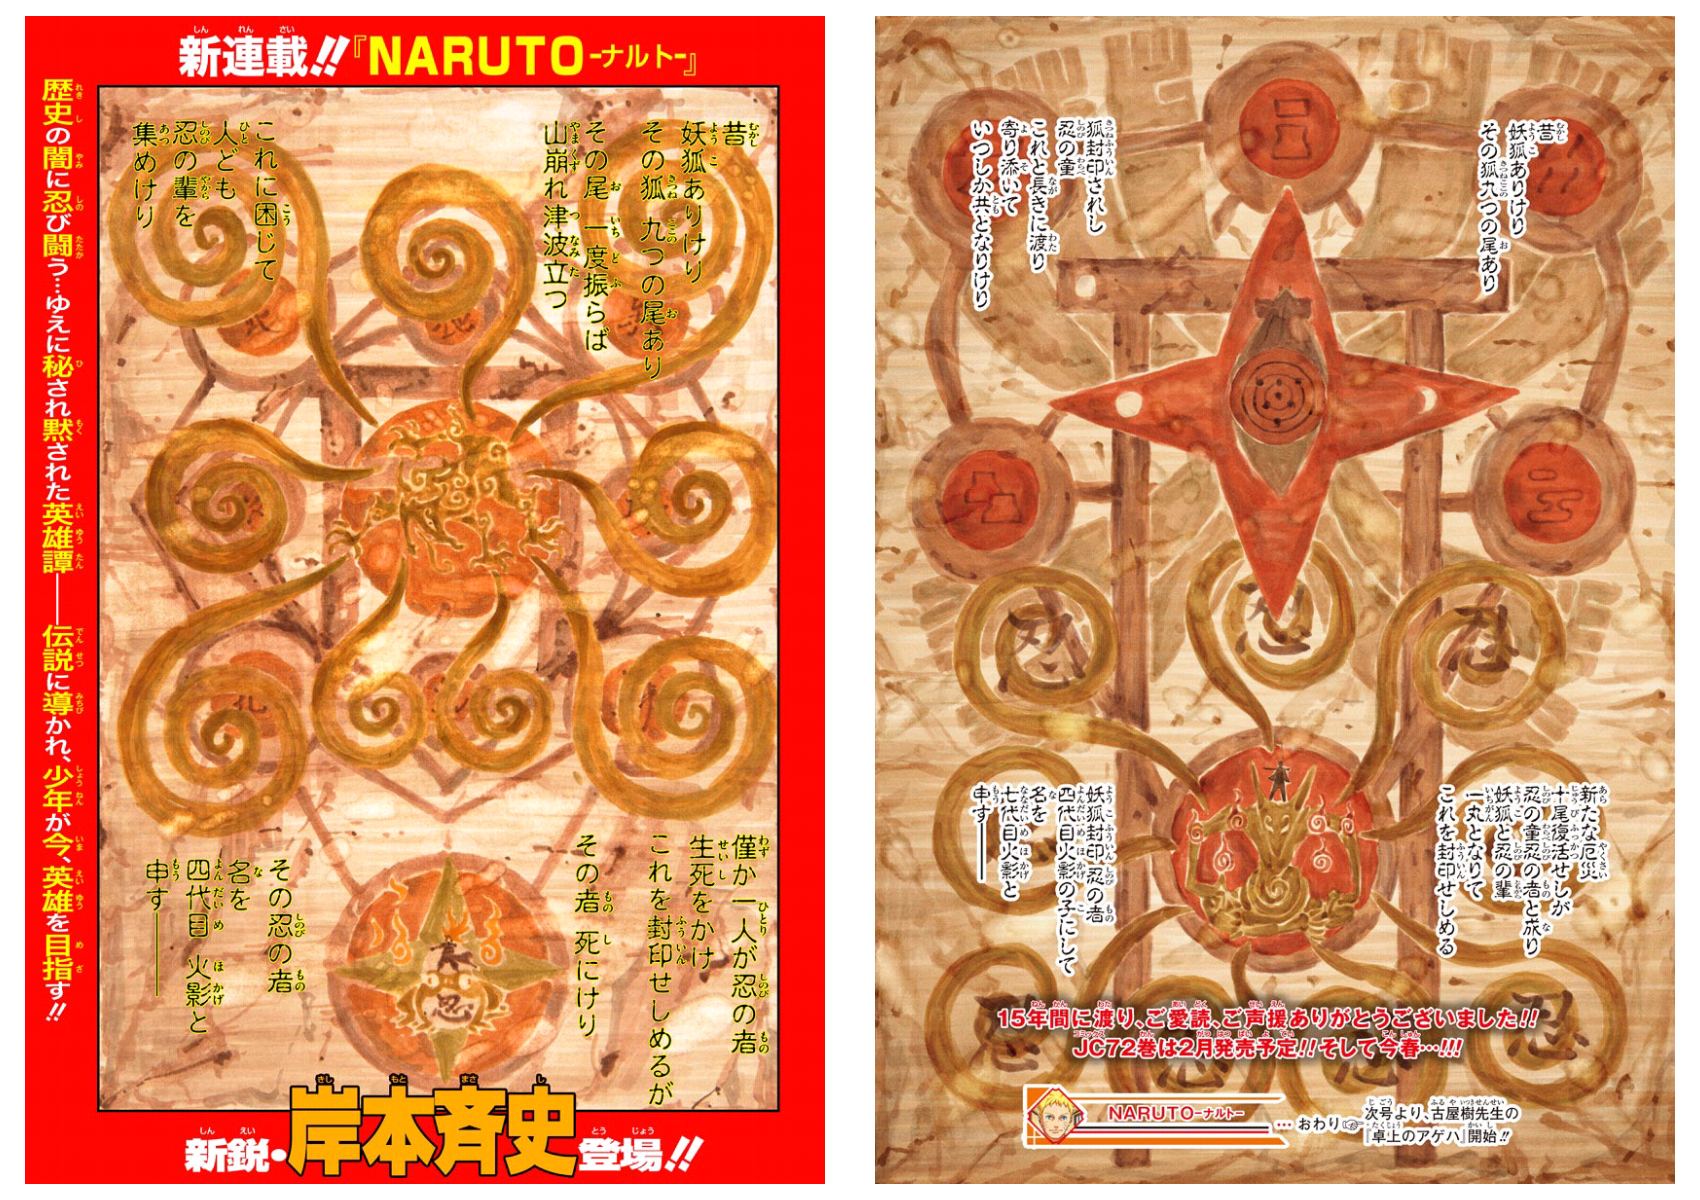 Naruto: Colour Edition, Narutopedia